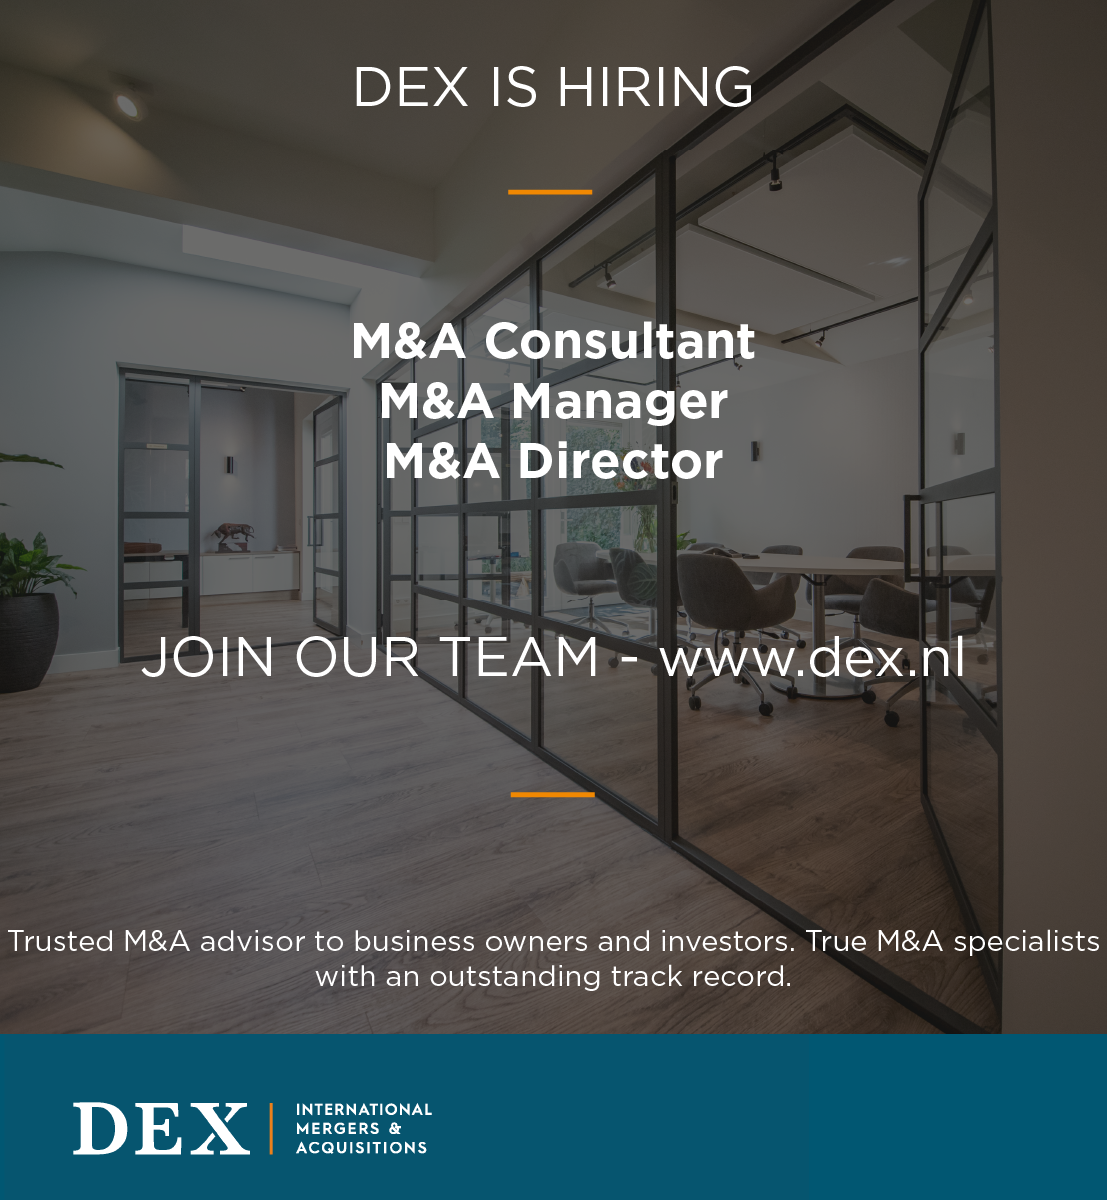 DEX international M&A is hiring!